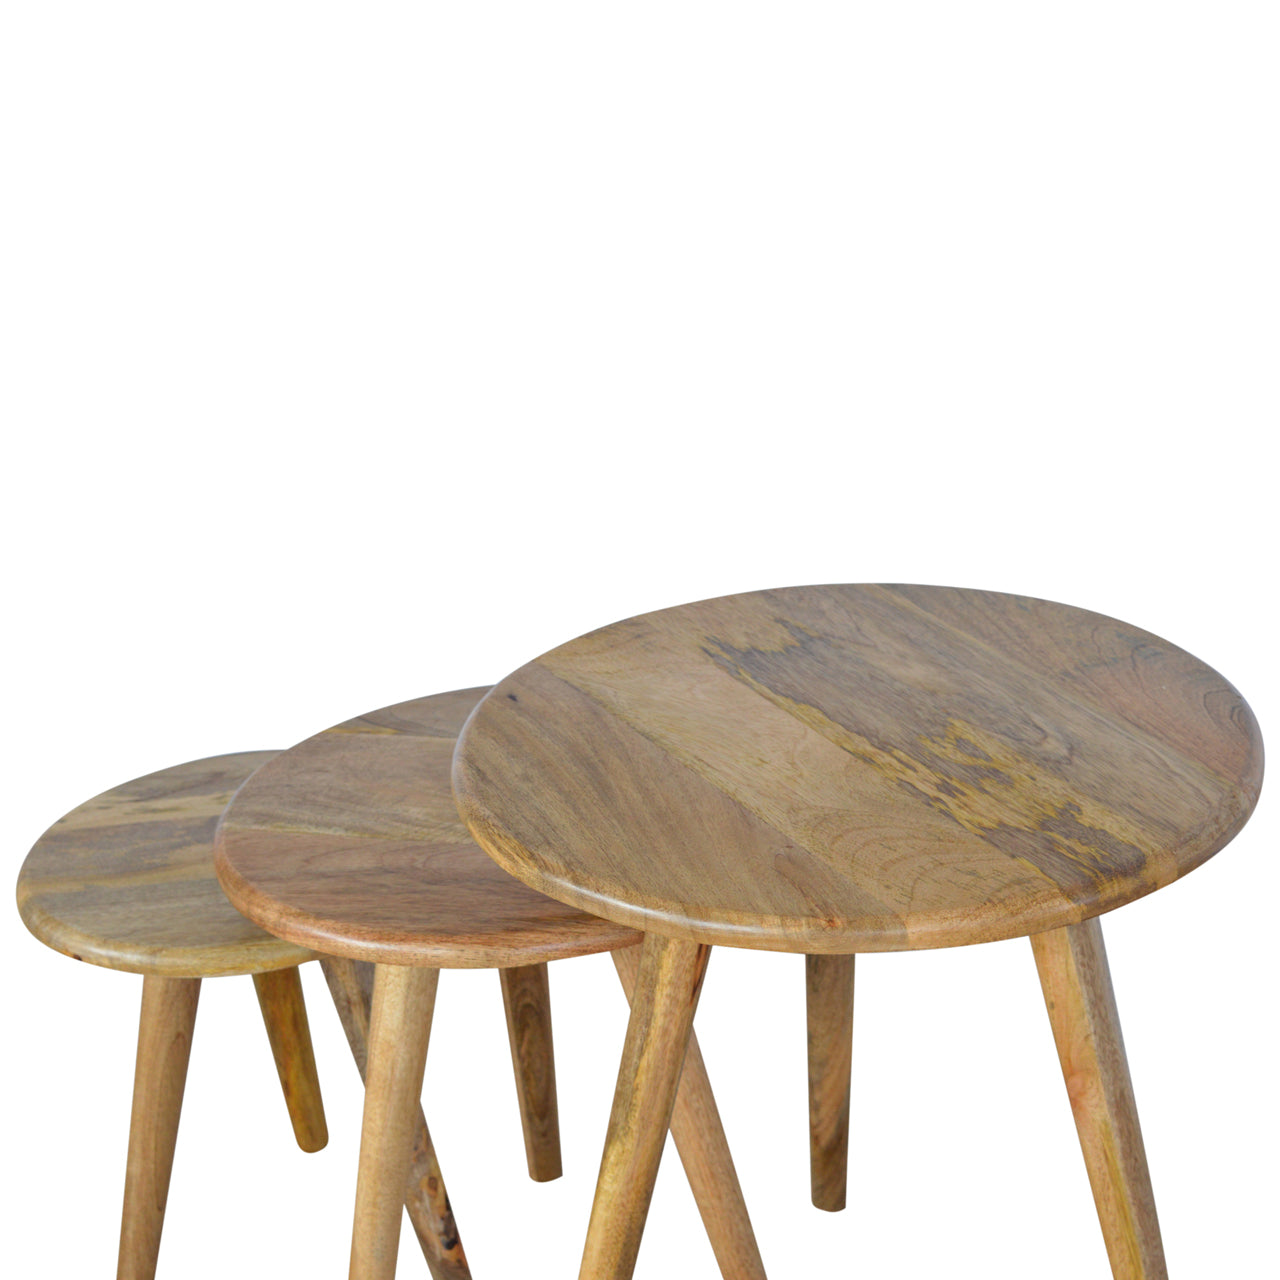 Aspel Set of 3 Side Tables, Nordic Solid Oak - Broxle